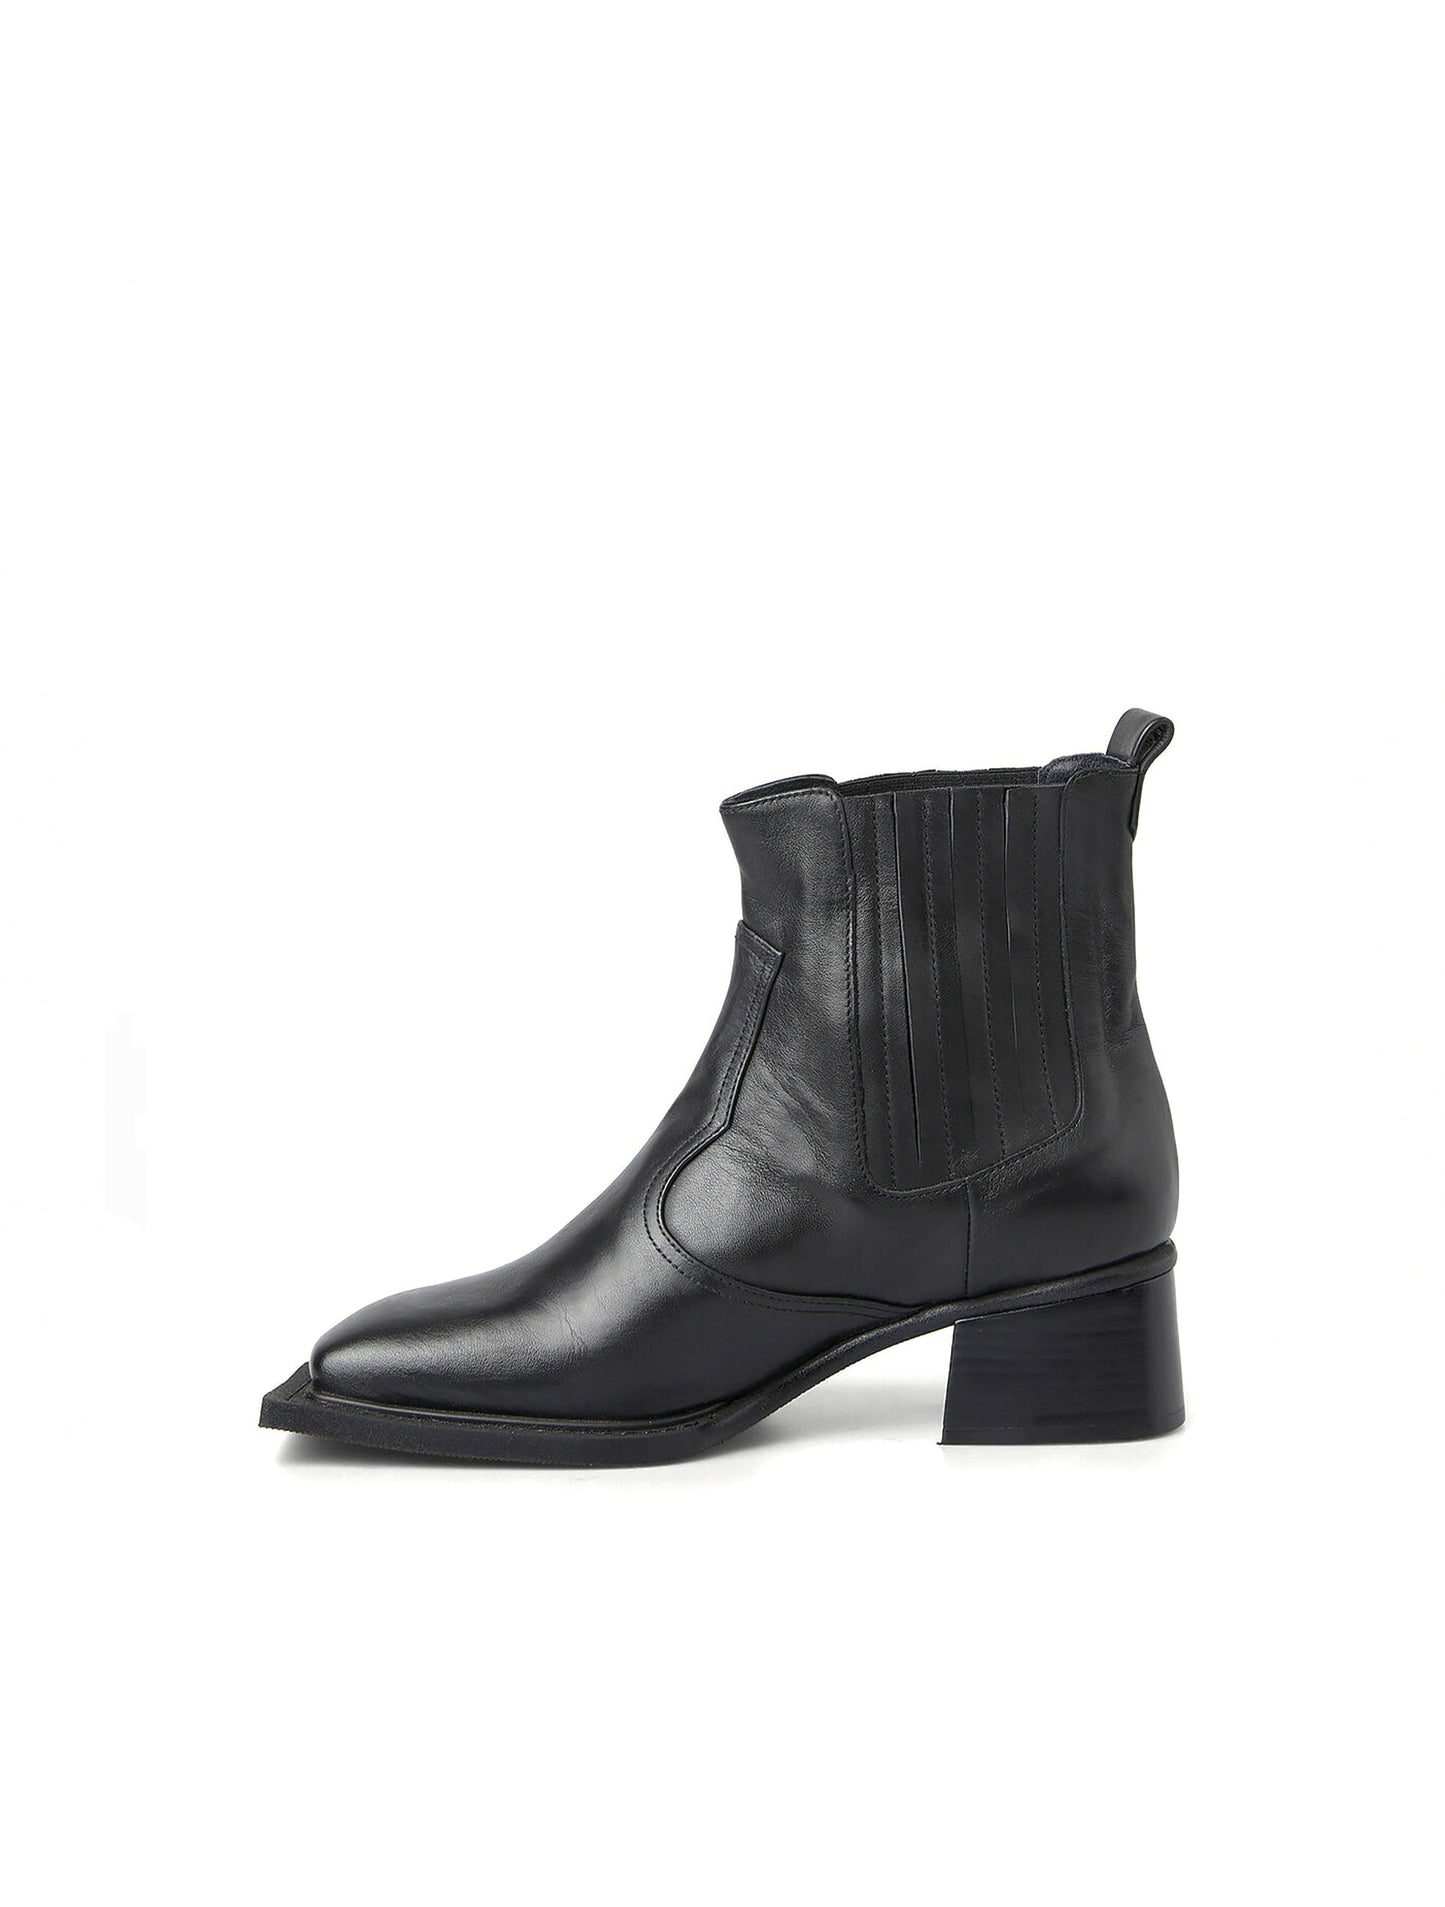 Ninamounah Howler Black Chelsea Boots